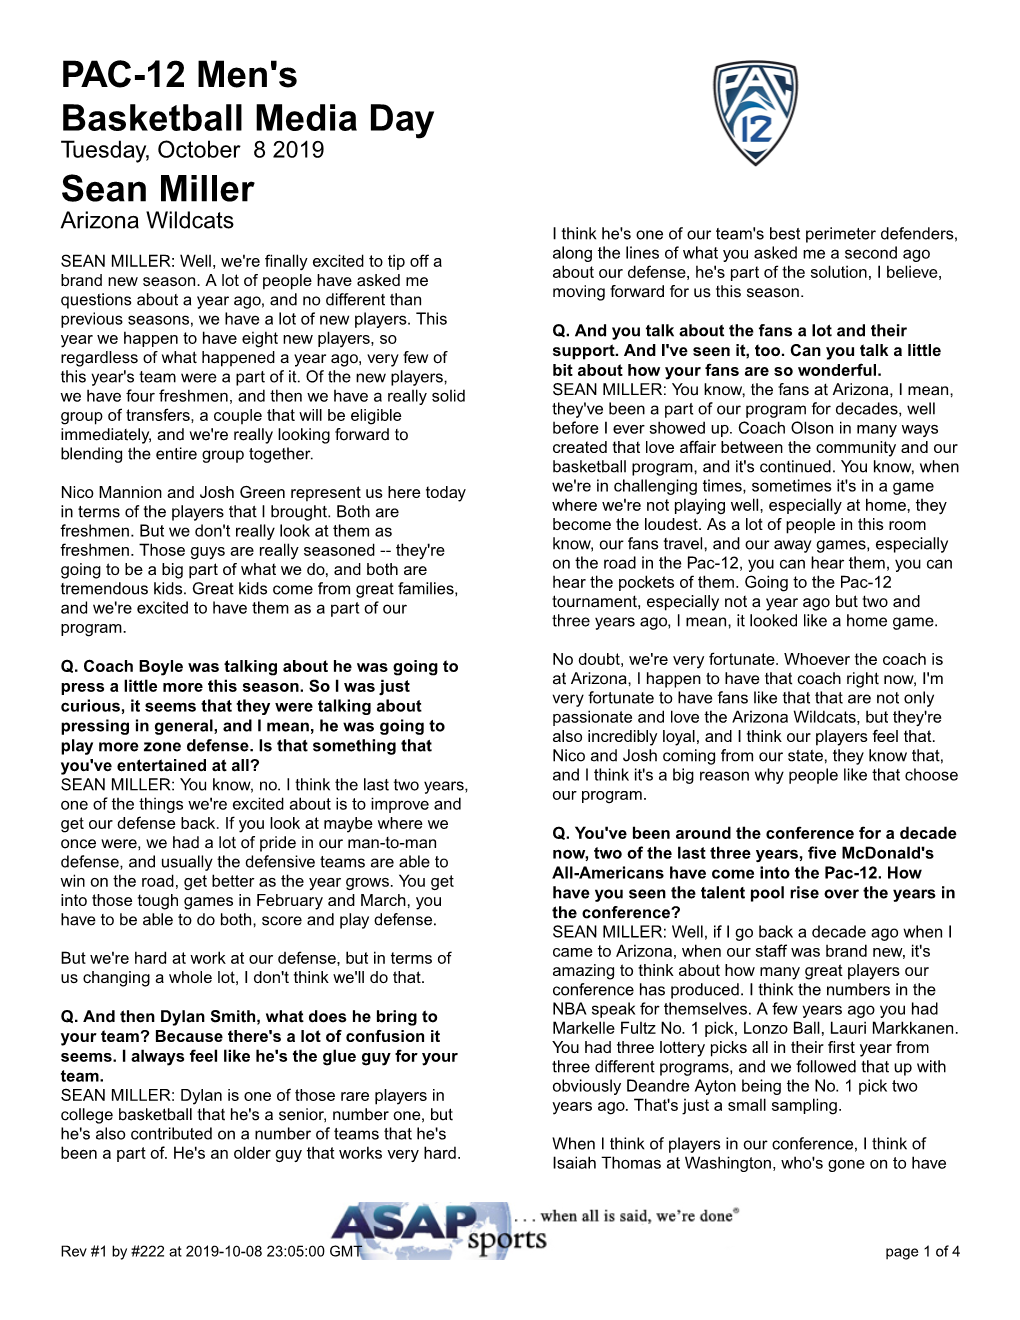 PAC-12 Men's Basketball Media Day Sean Miller